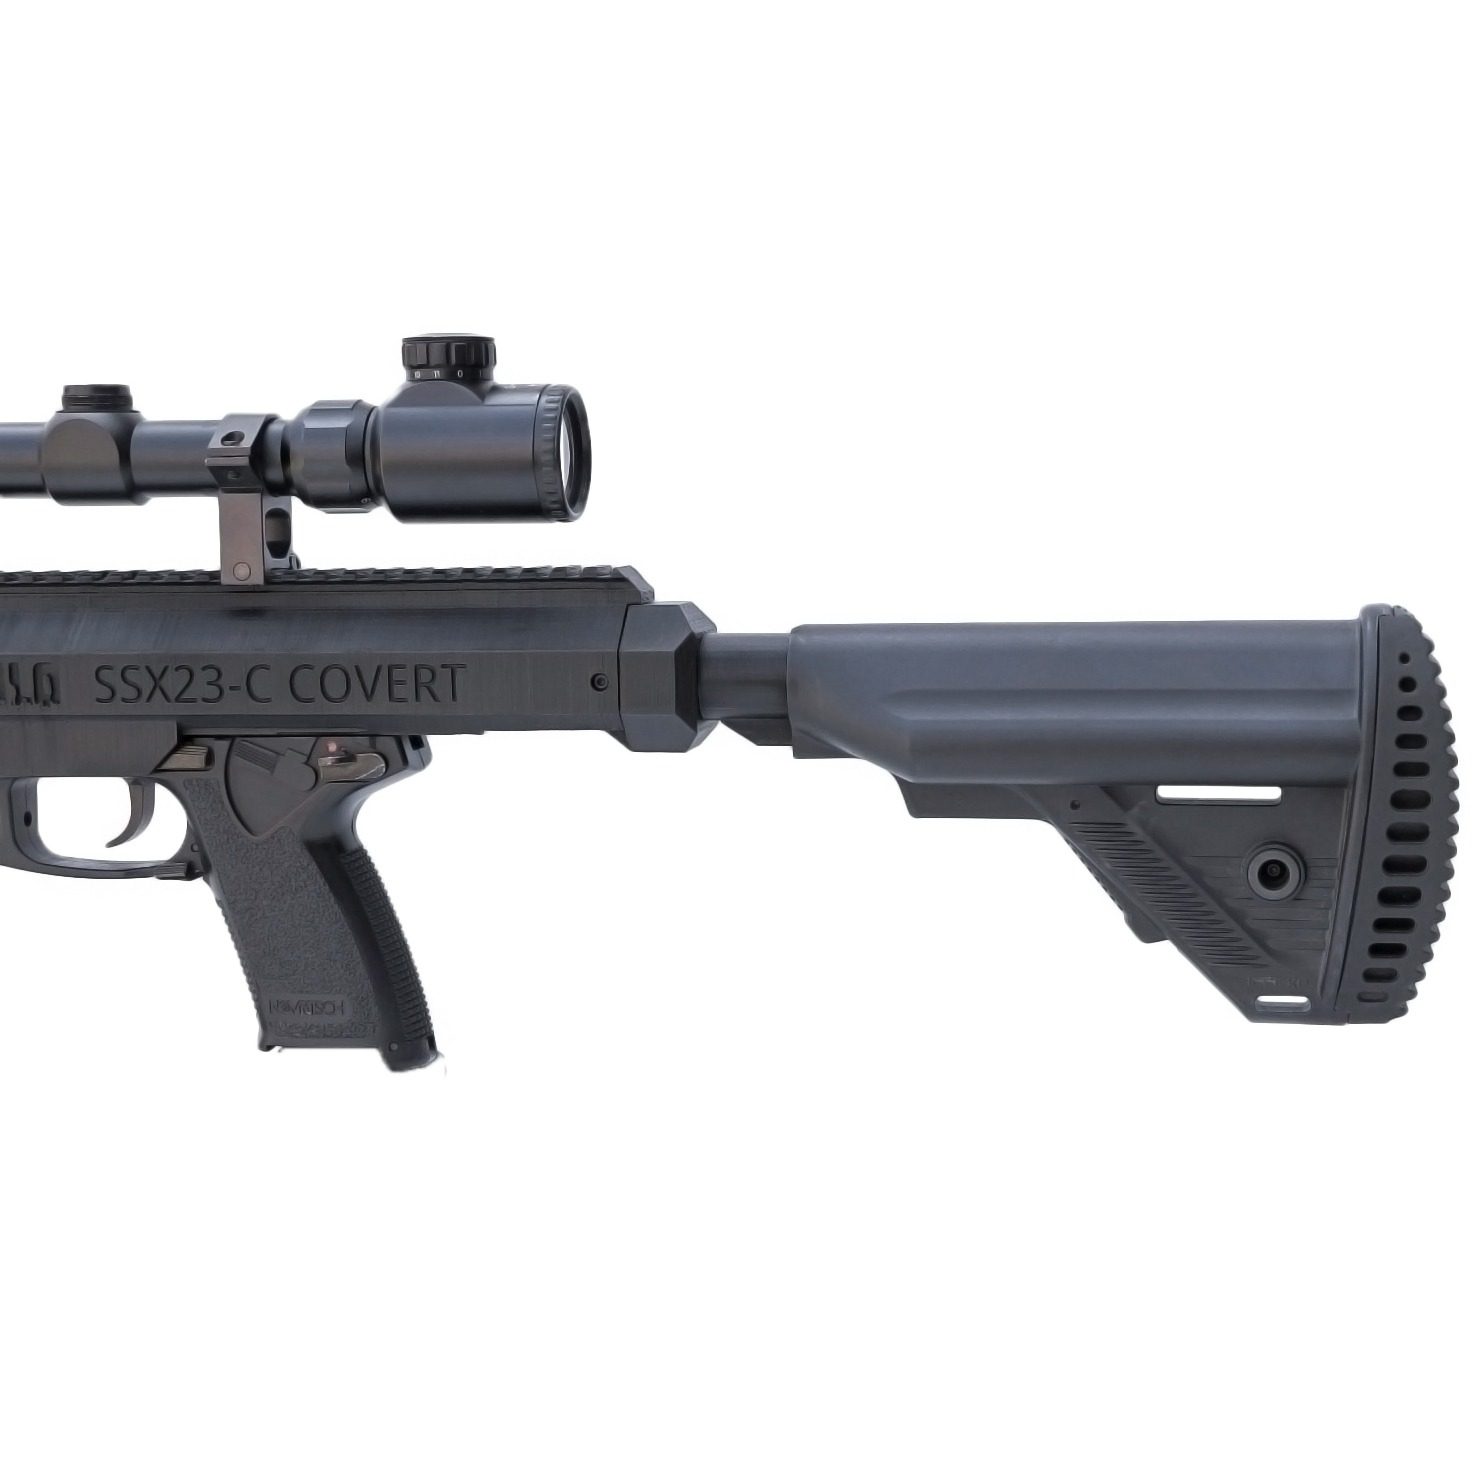 Paintball Pistol Turned Sniper Rifle